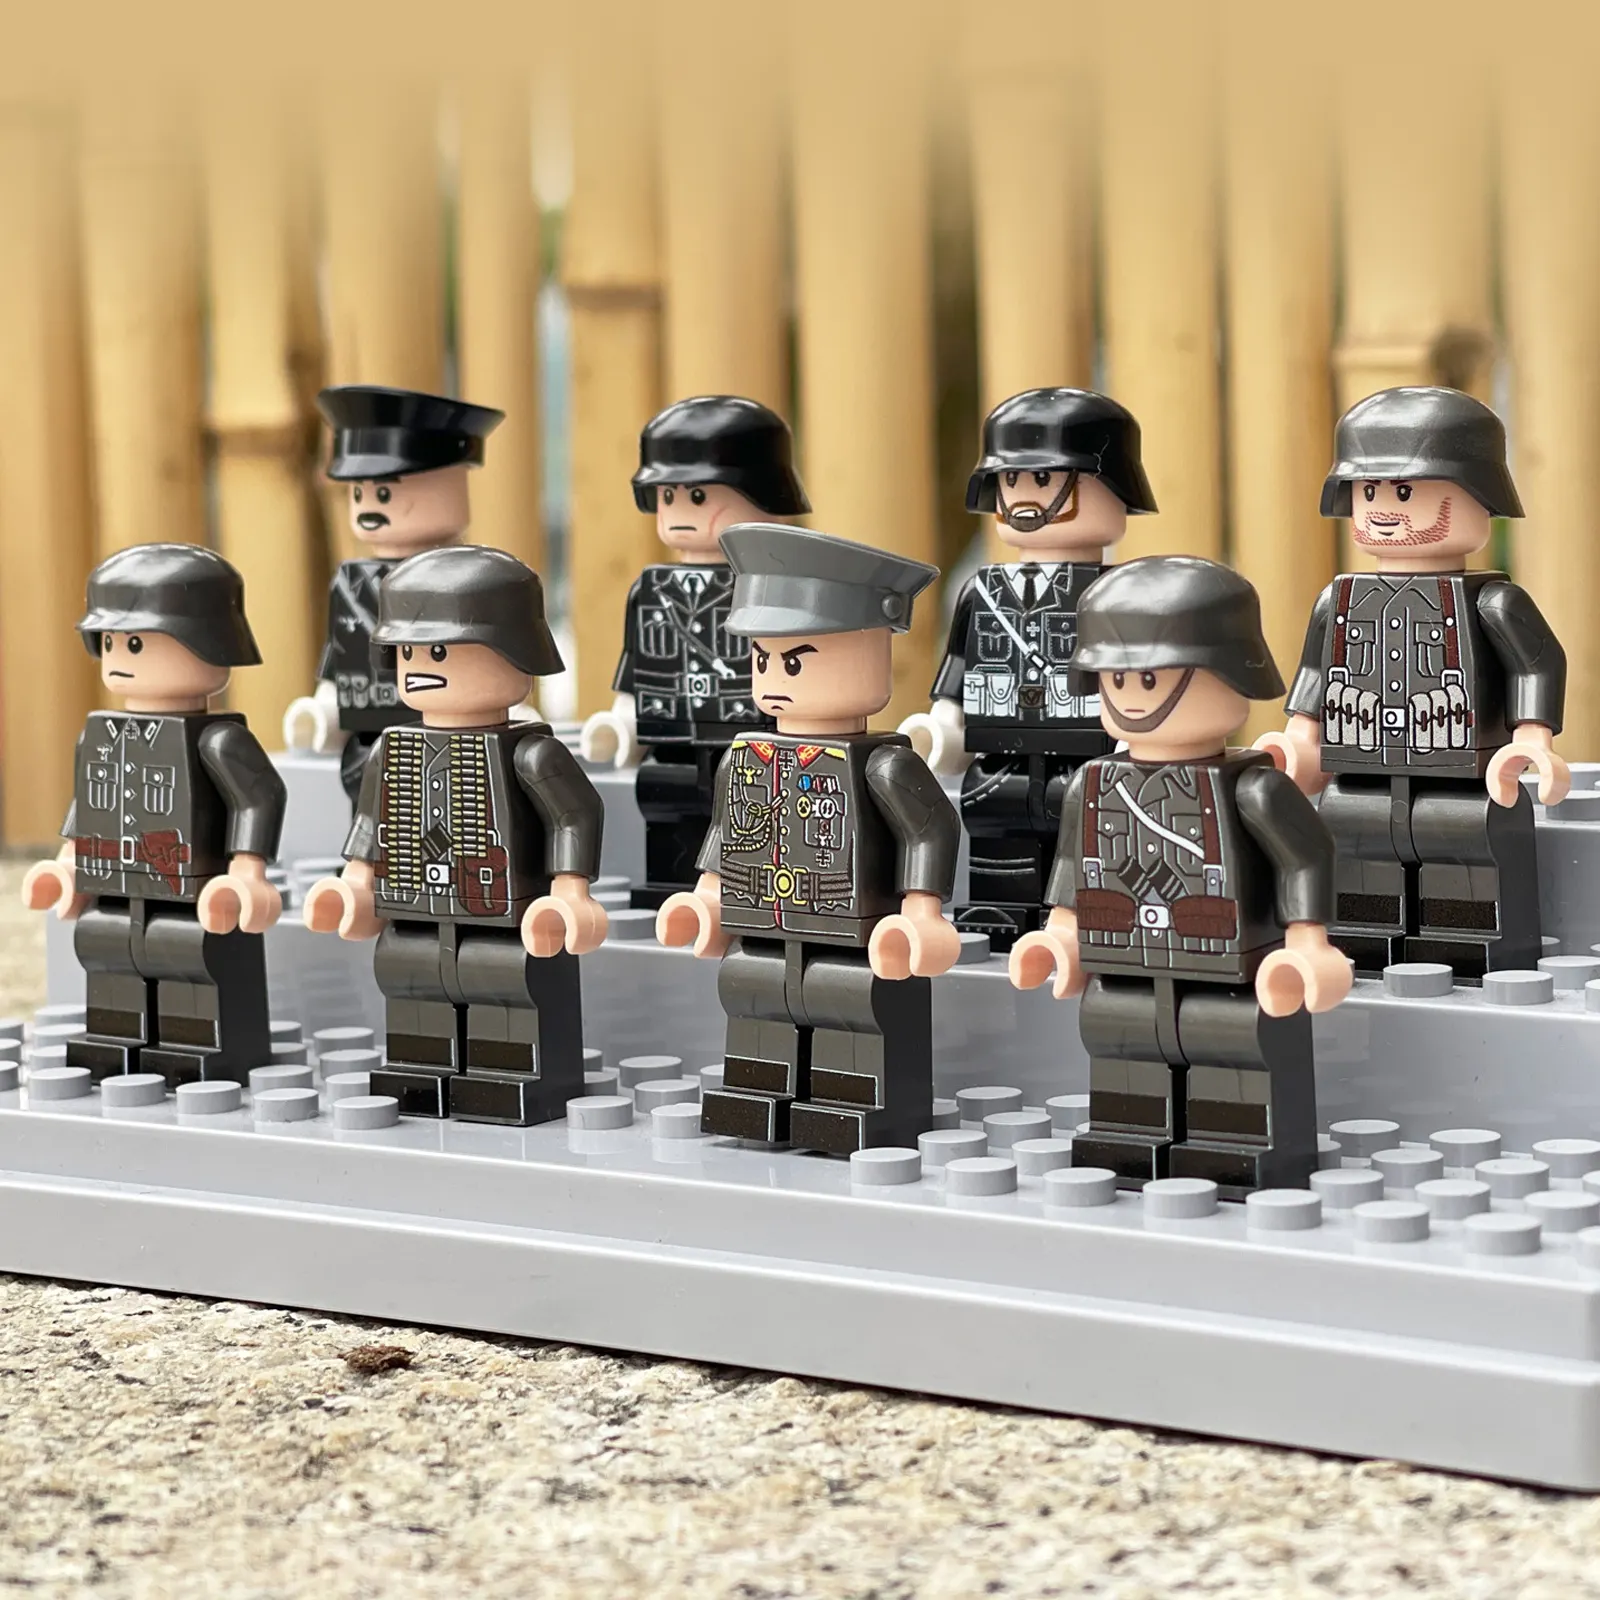 Mainan Figur Tentara Militer PD2, 8 Buah/Set Mainan Balok Bangunan Tentara Jerman Mini untuk Hadiah Anak Laki-laki